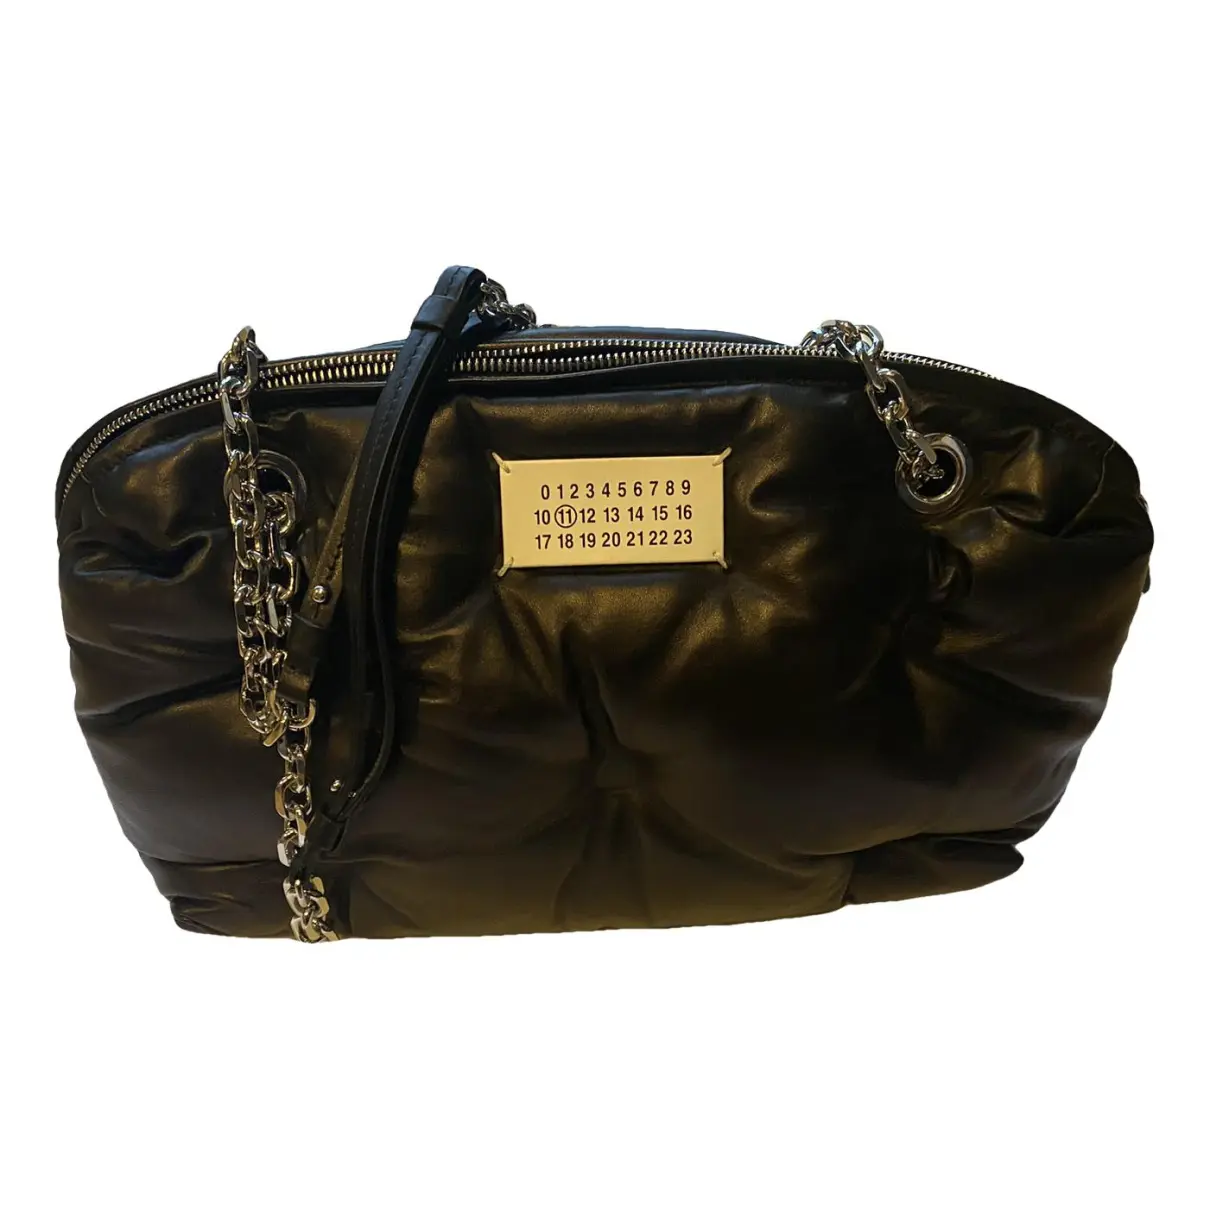 Glam Slam leather handbag